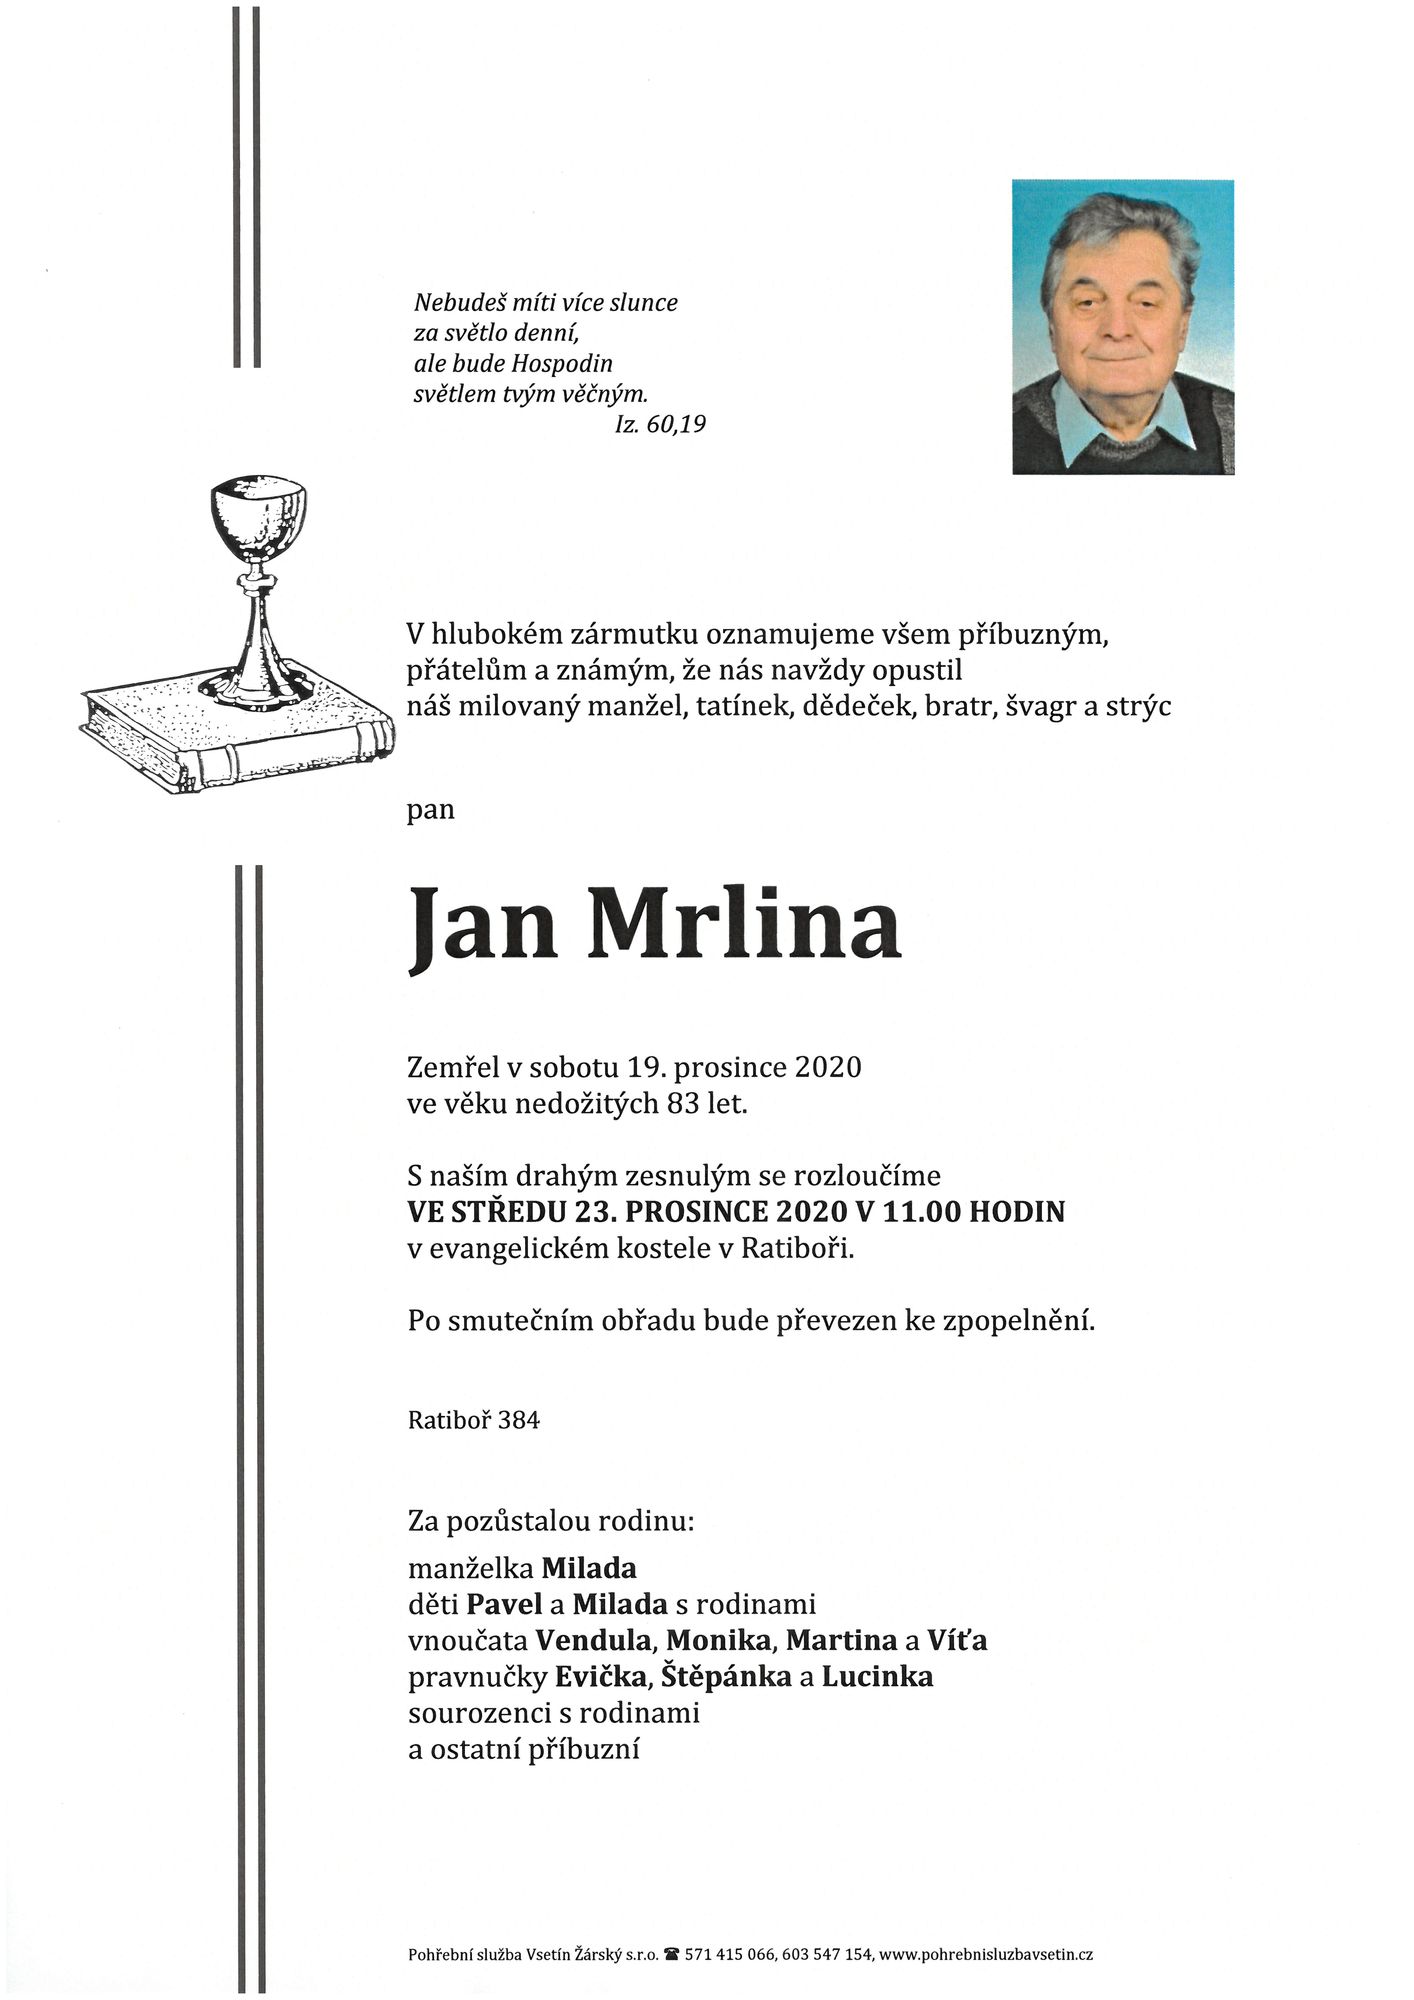 Jan Mrlina